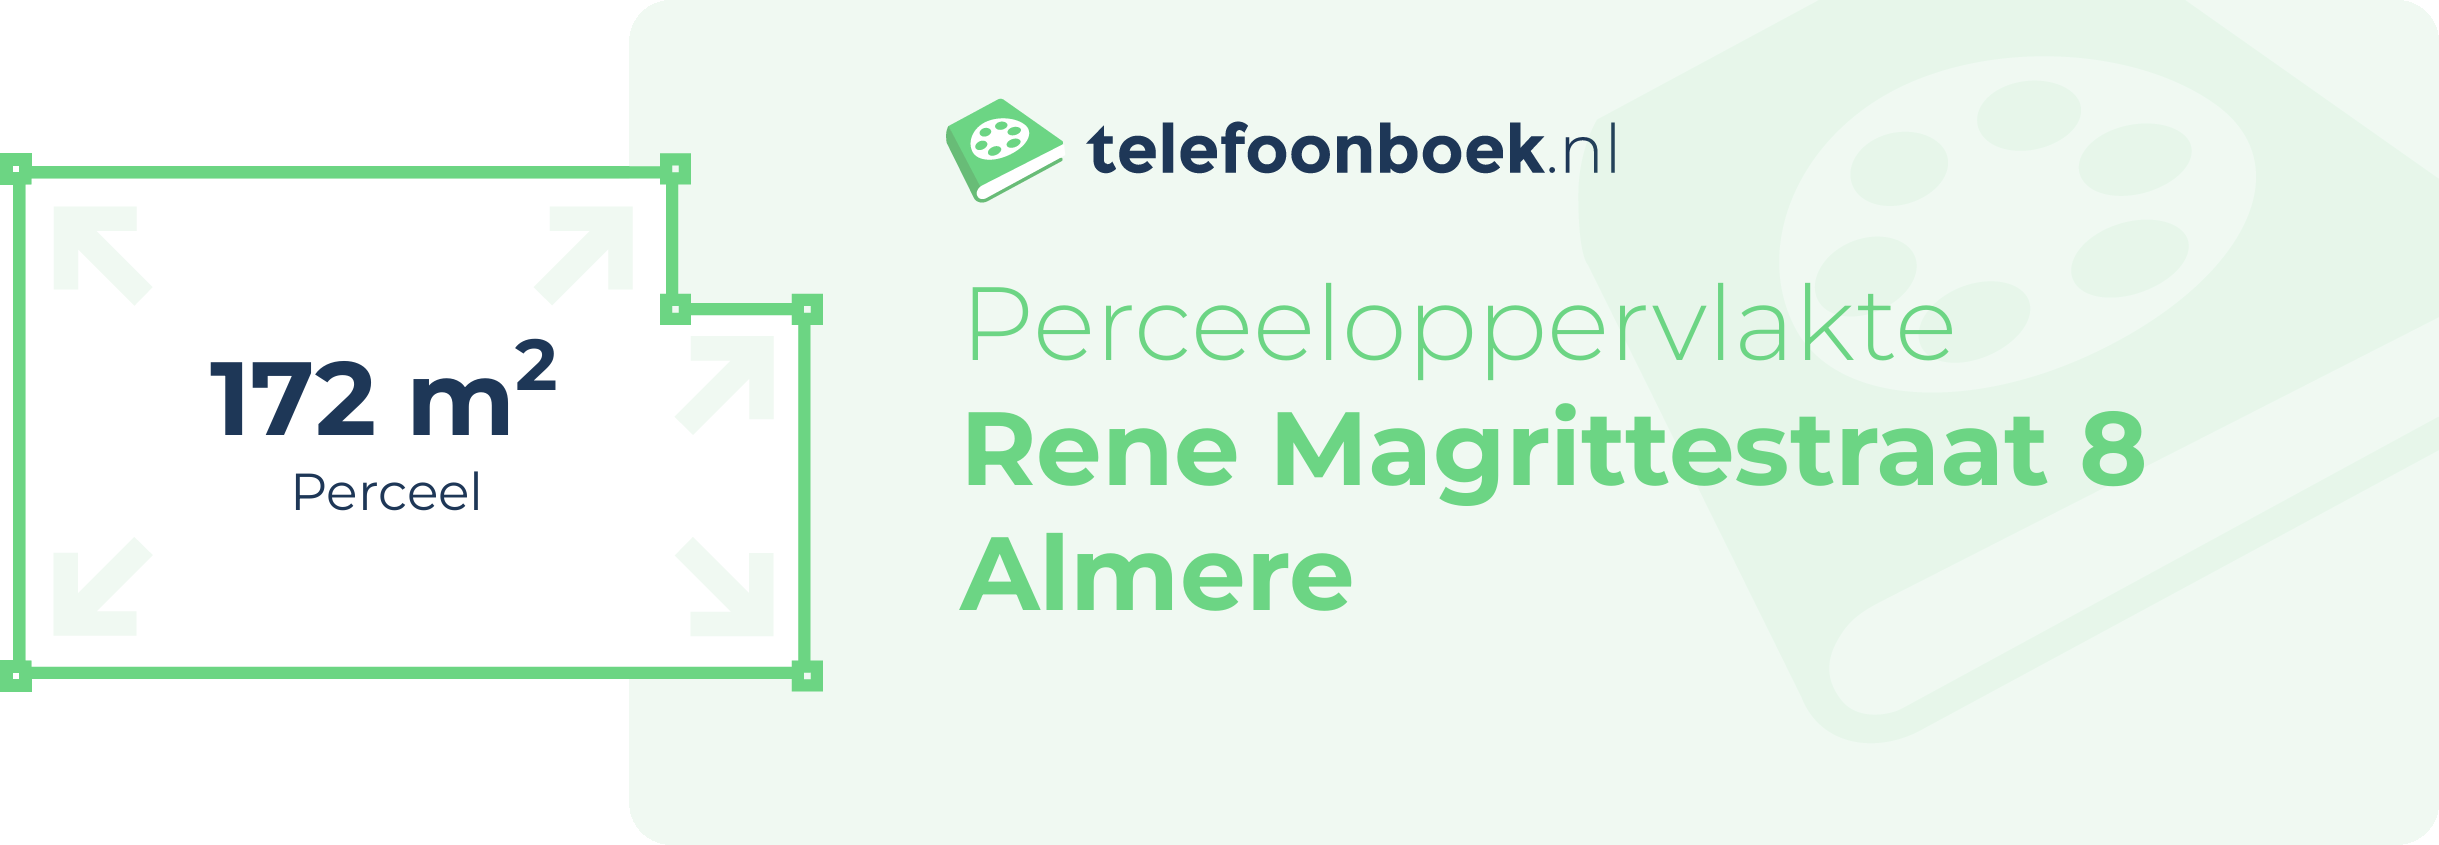 Perceeloppervlakte Rene Magrittestraat 8 Almere